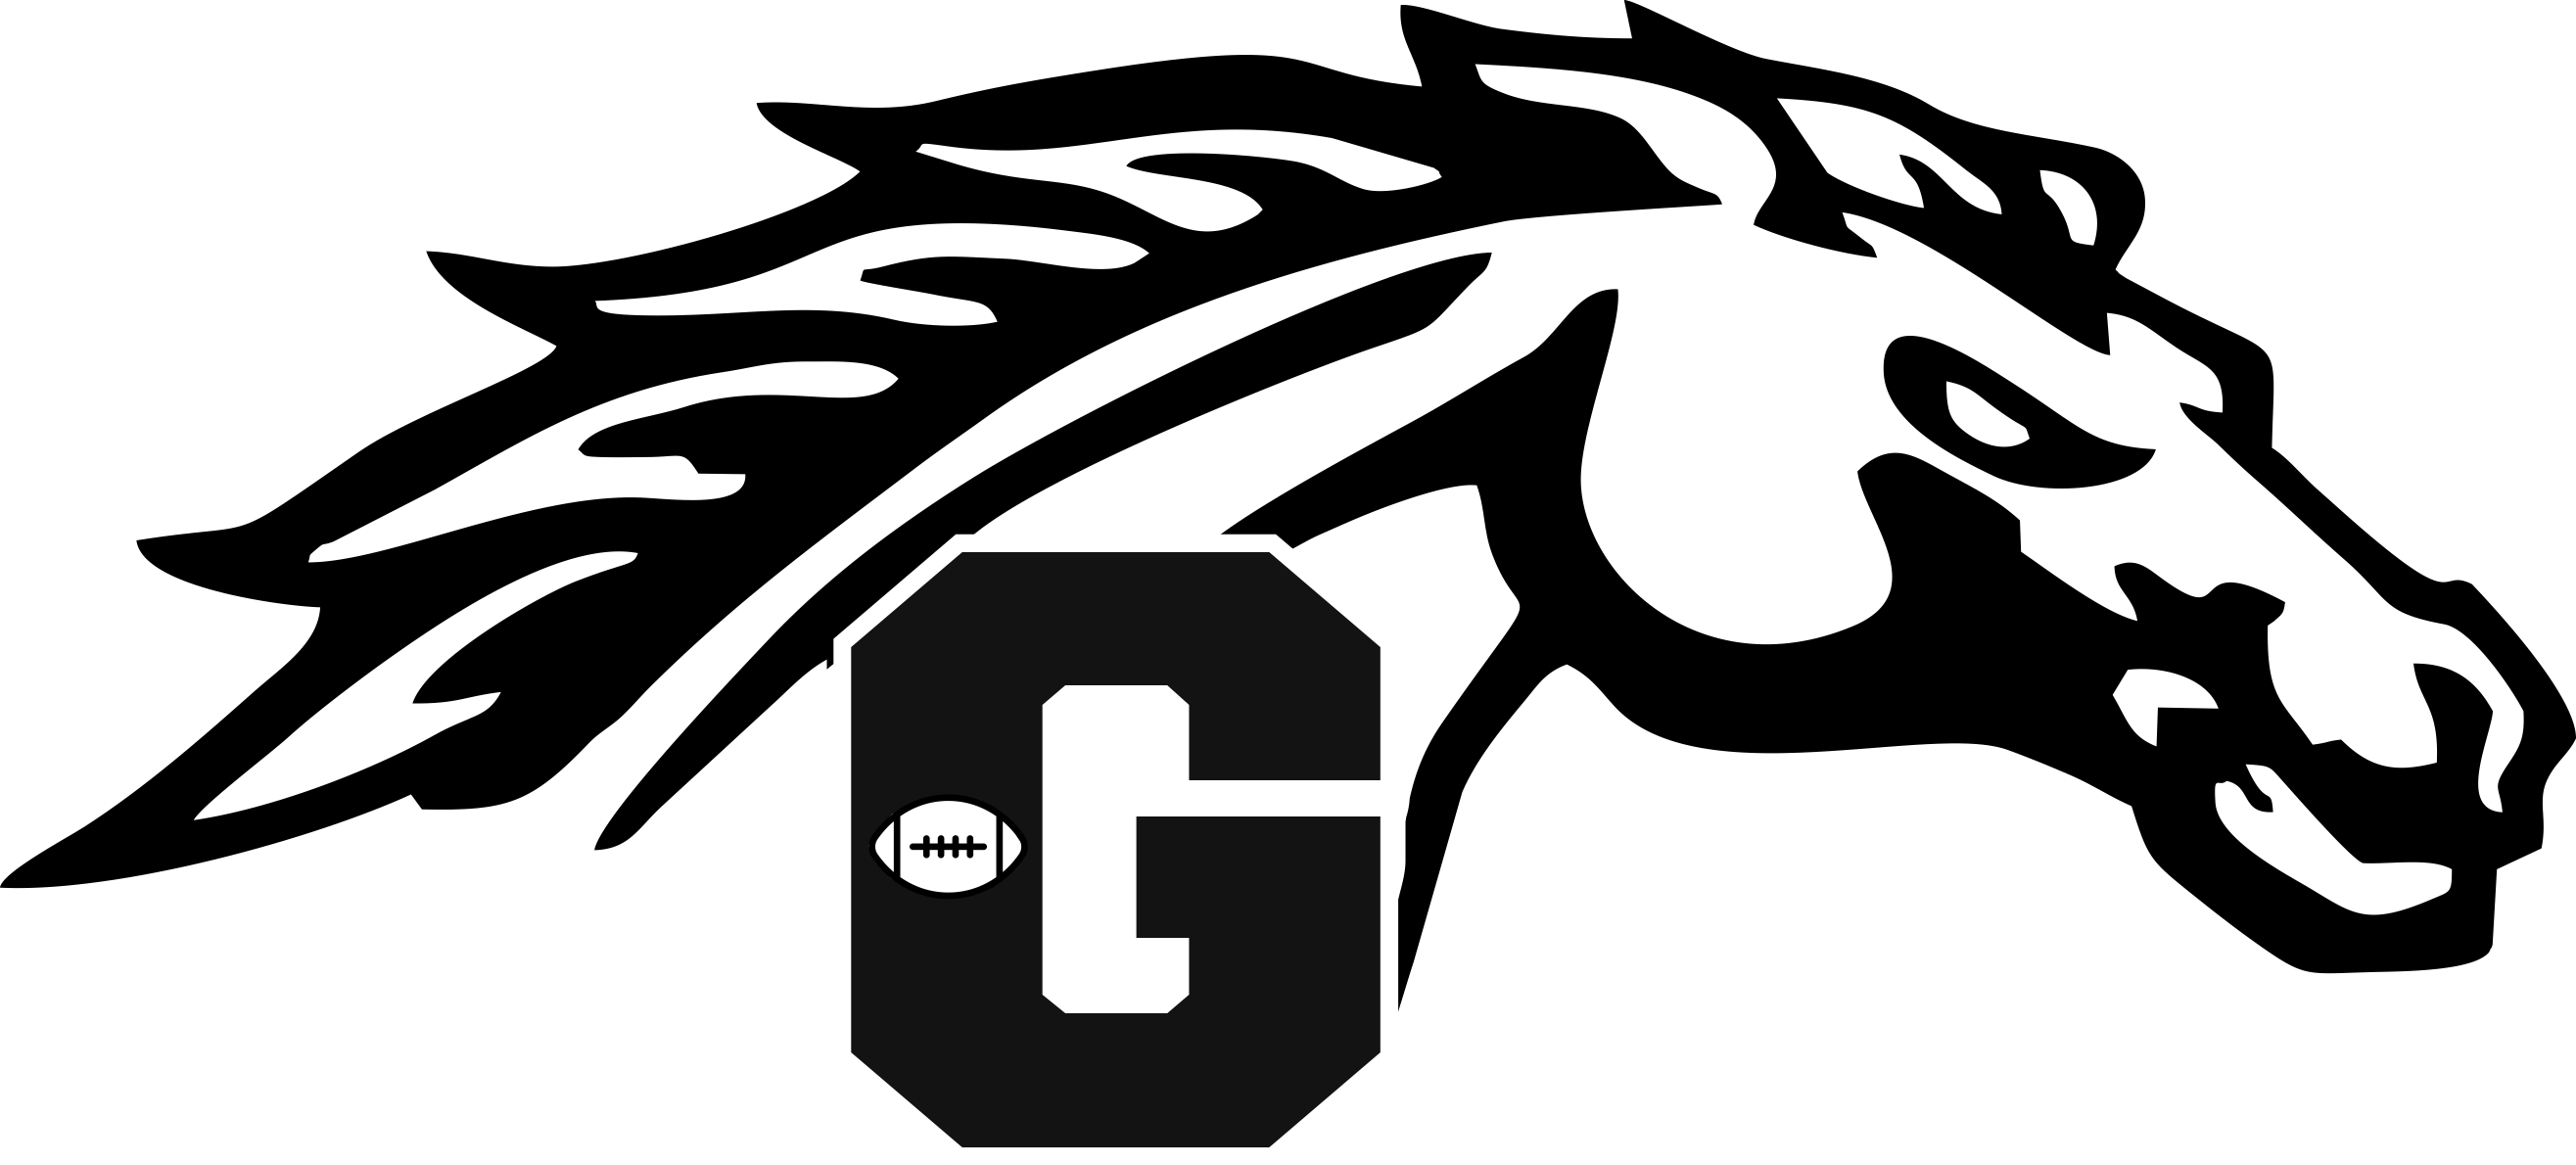 Mustang Football Logo - Gamber Mustangs Football - Product: Mustangs Football Mustang Logo ...